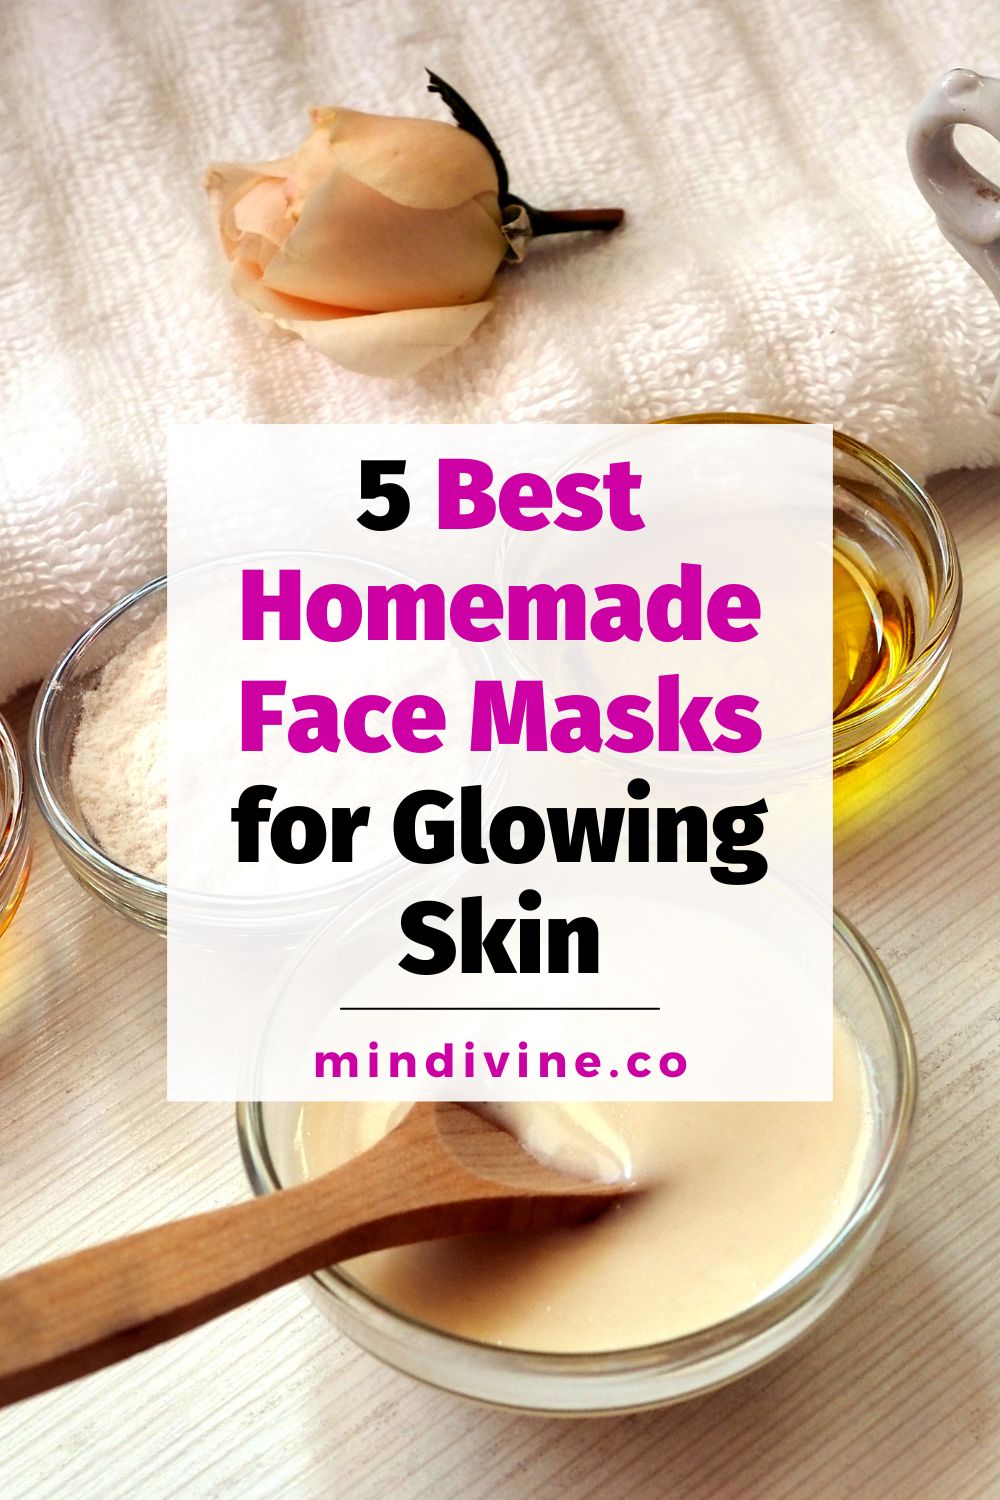 Natural ingredients to make homemade face masks for radiant skin.